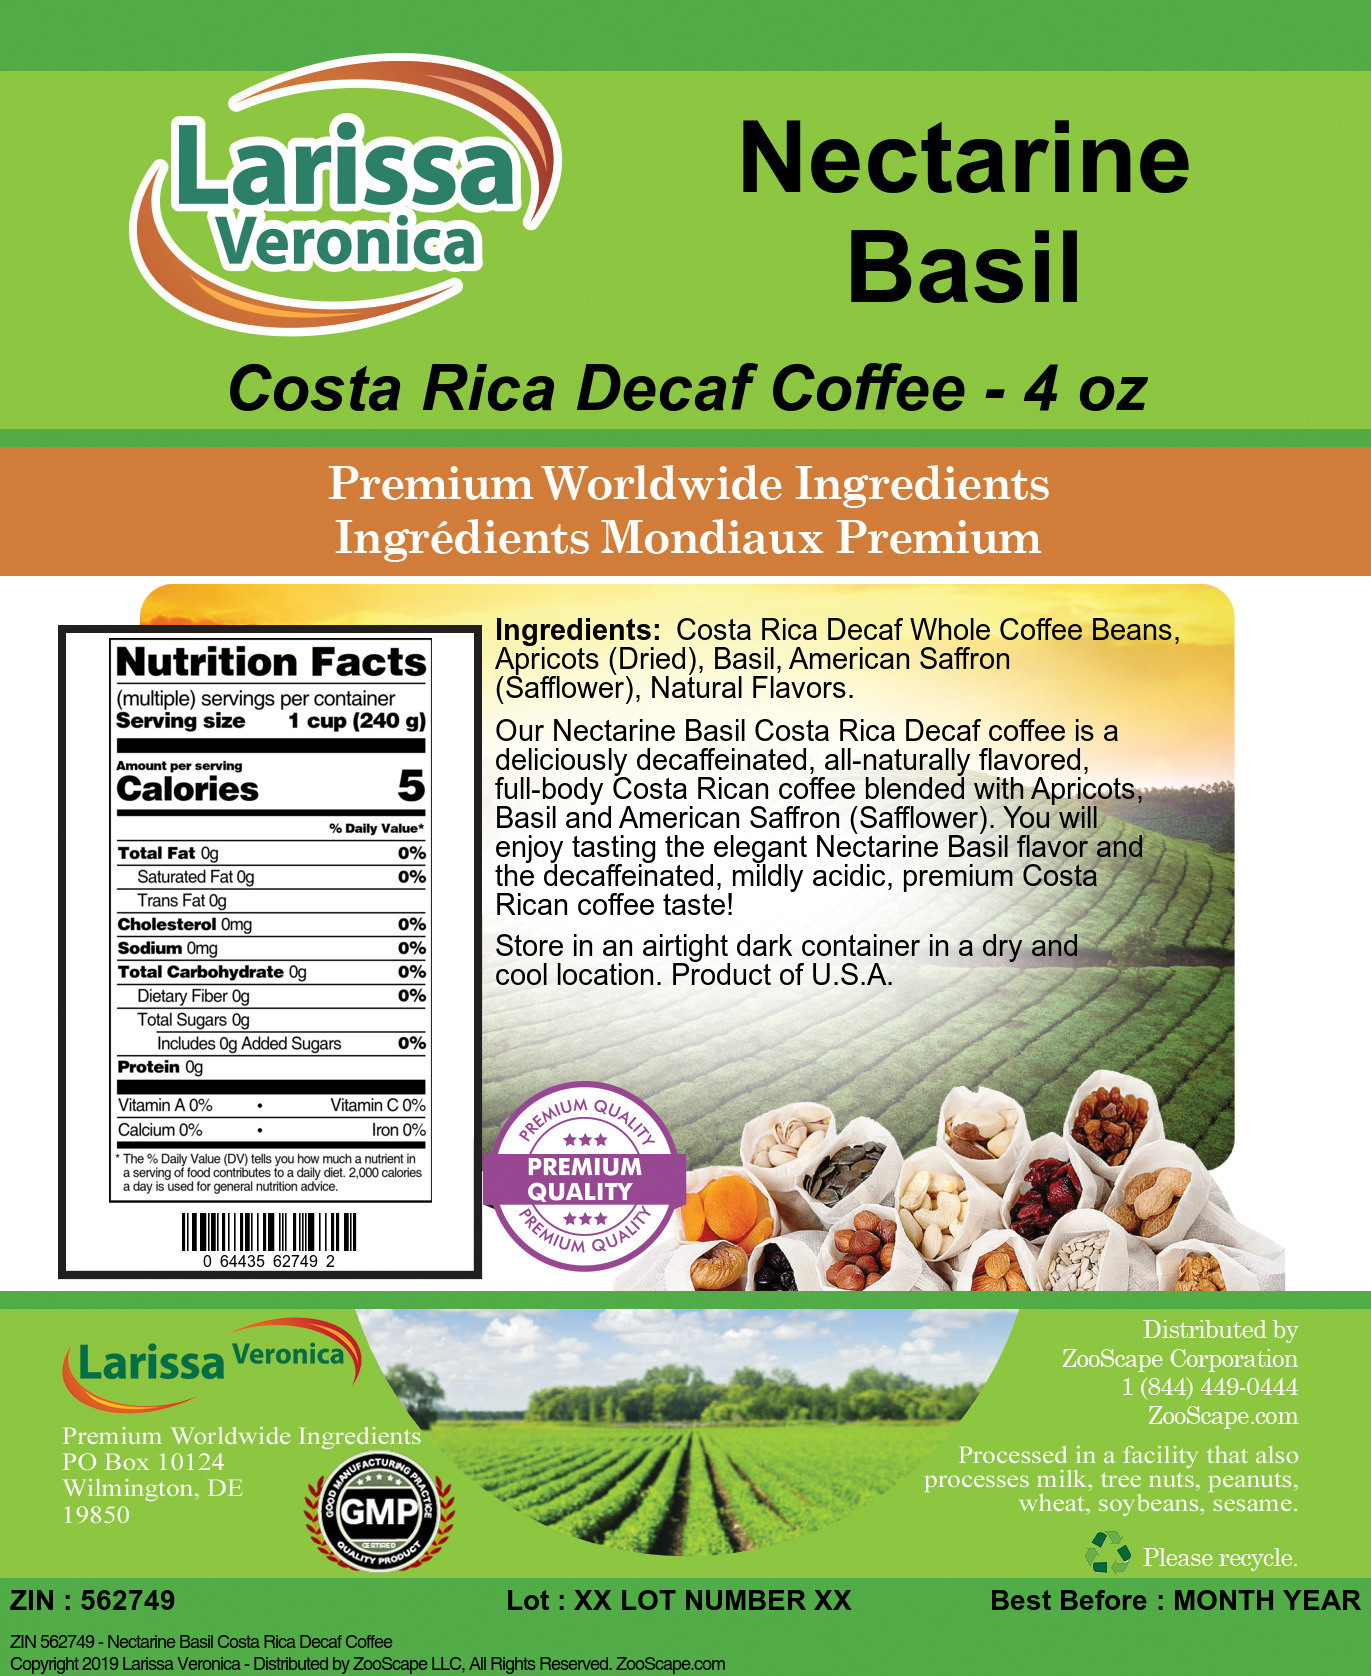 Nectarine Basil Costa Rica Decaf Coffee - Label